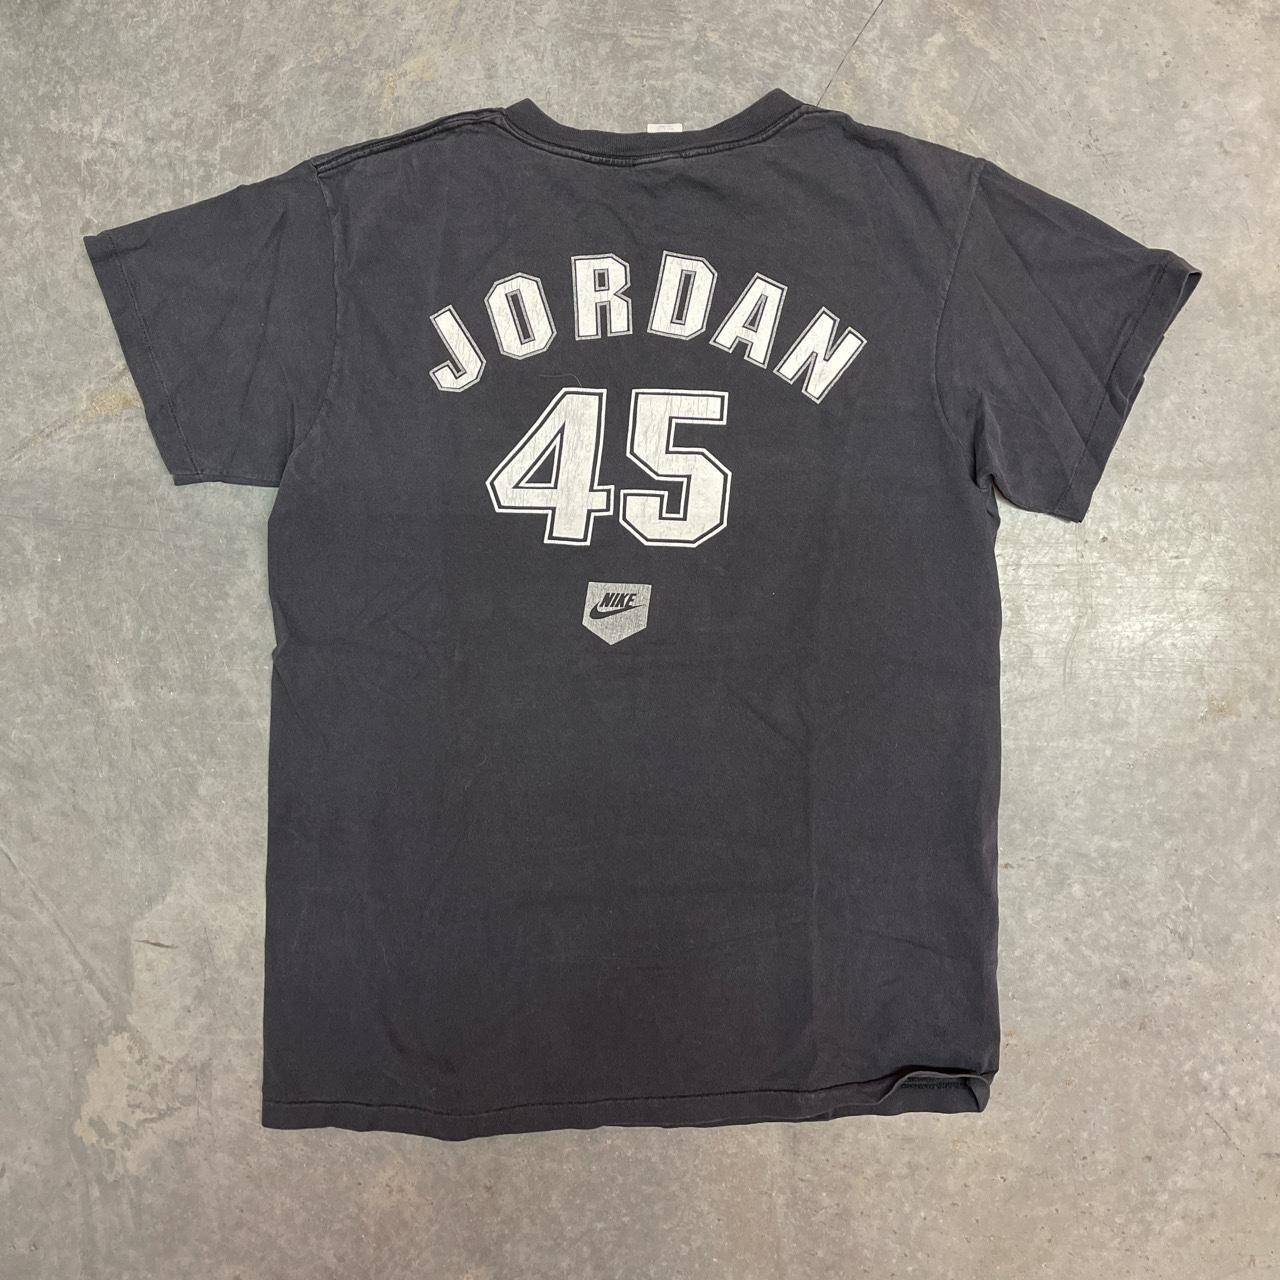 Vintage Michael Jordan baseball shirt Has fading - Depop